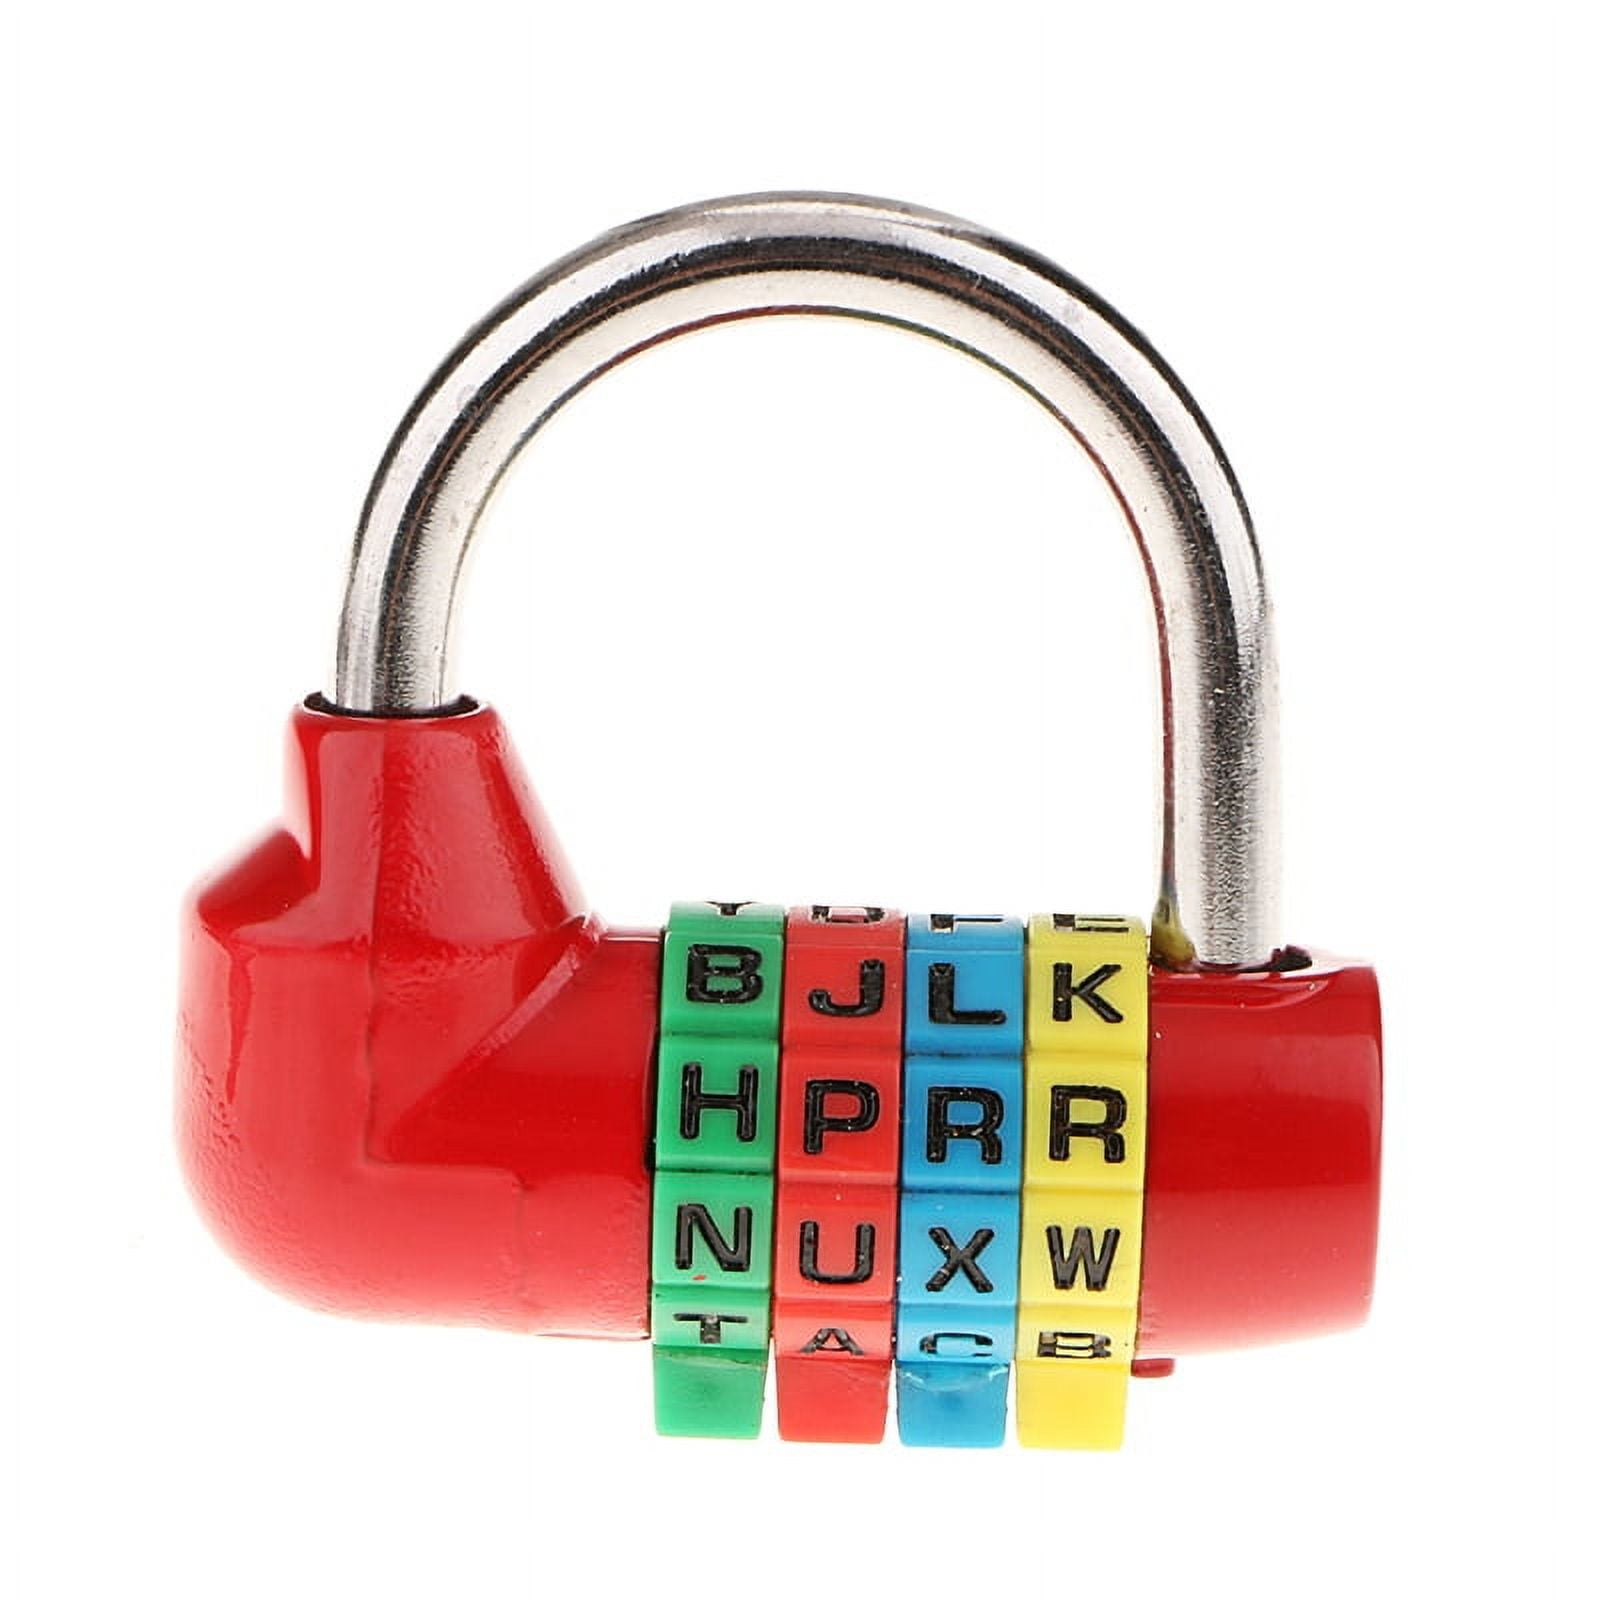 Door Locks, Safes, Padlocks, Home & Garage Security – Lock Shop